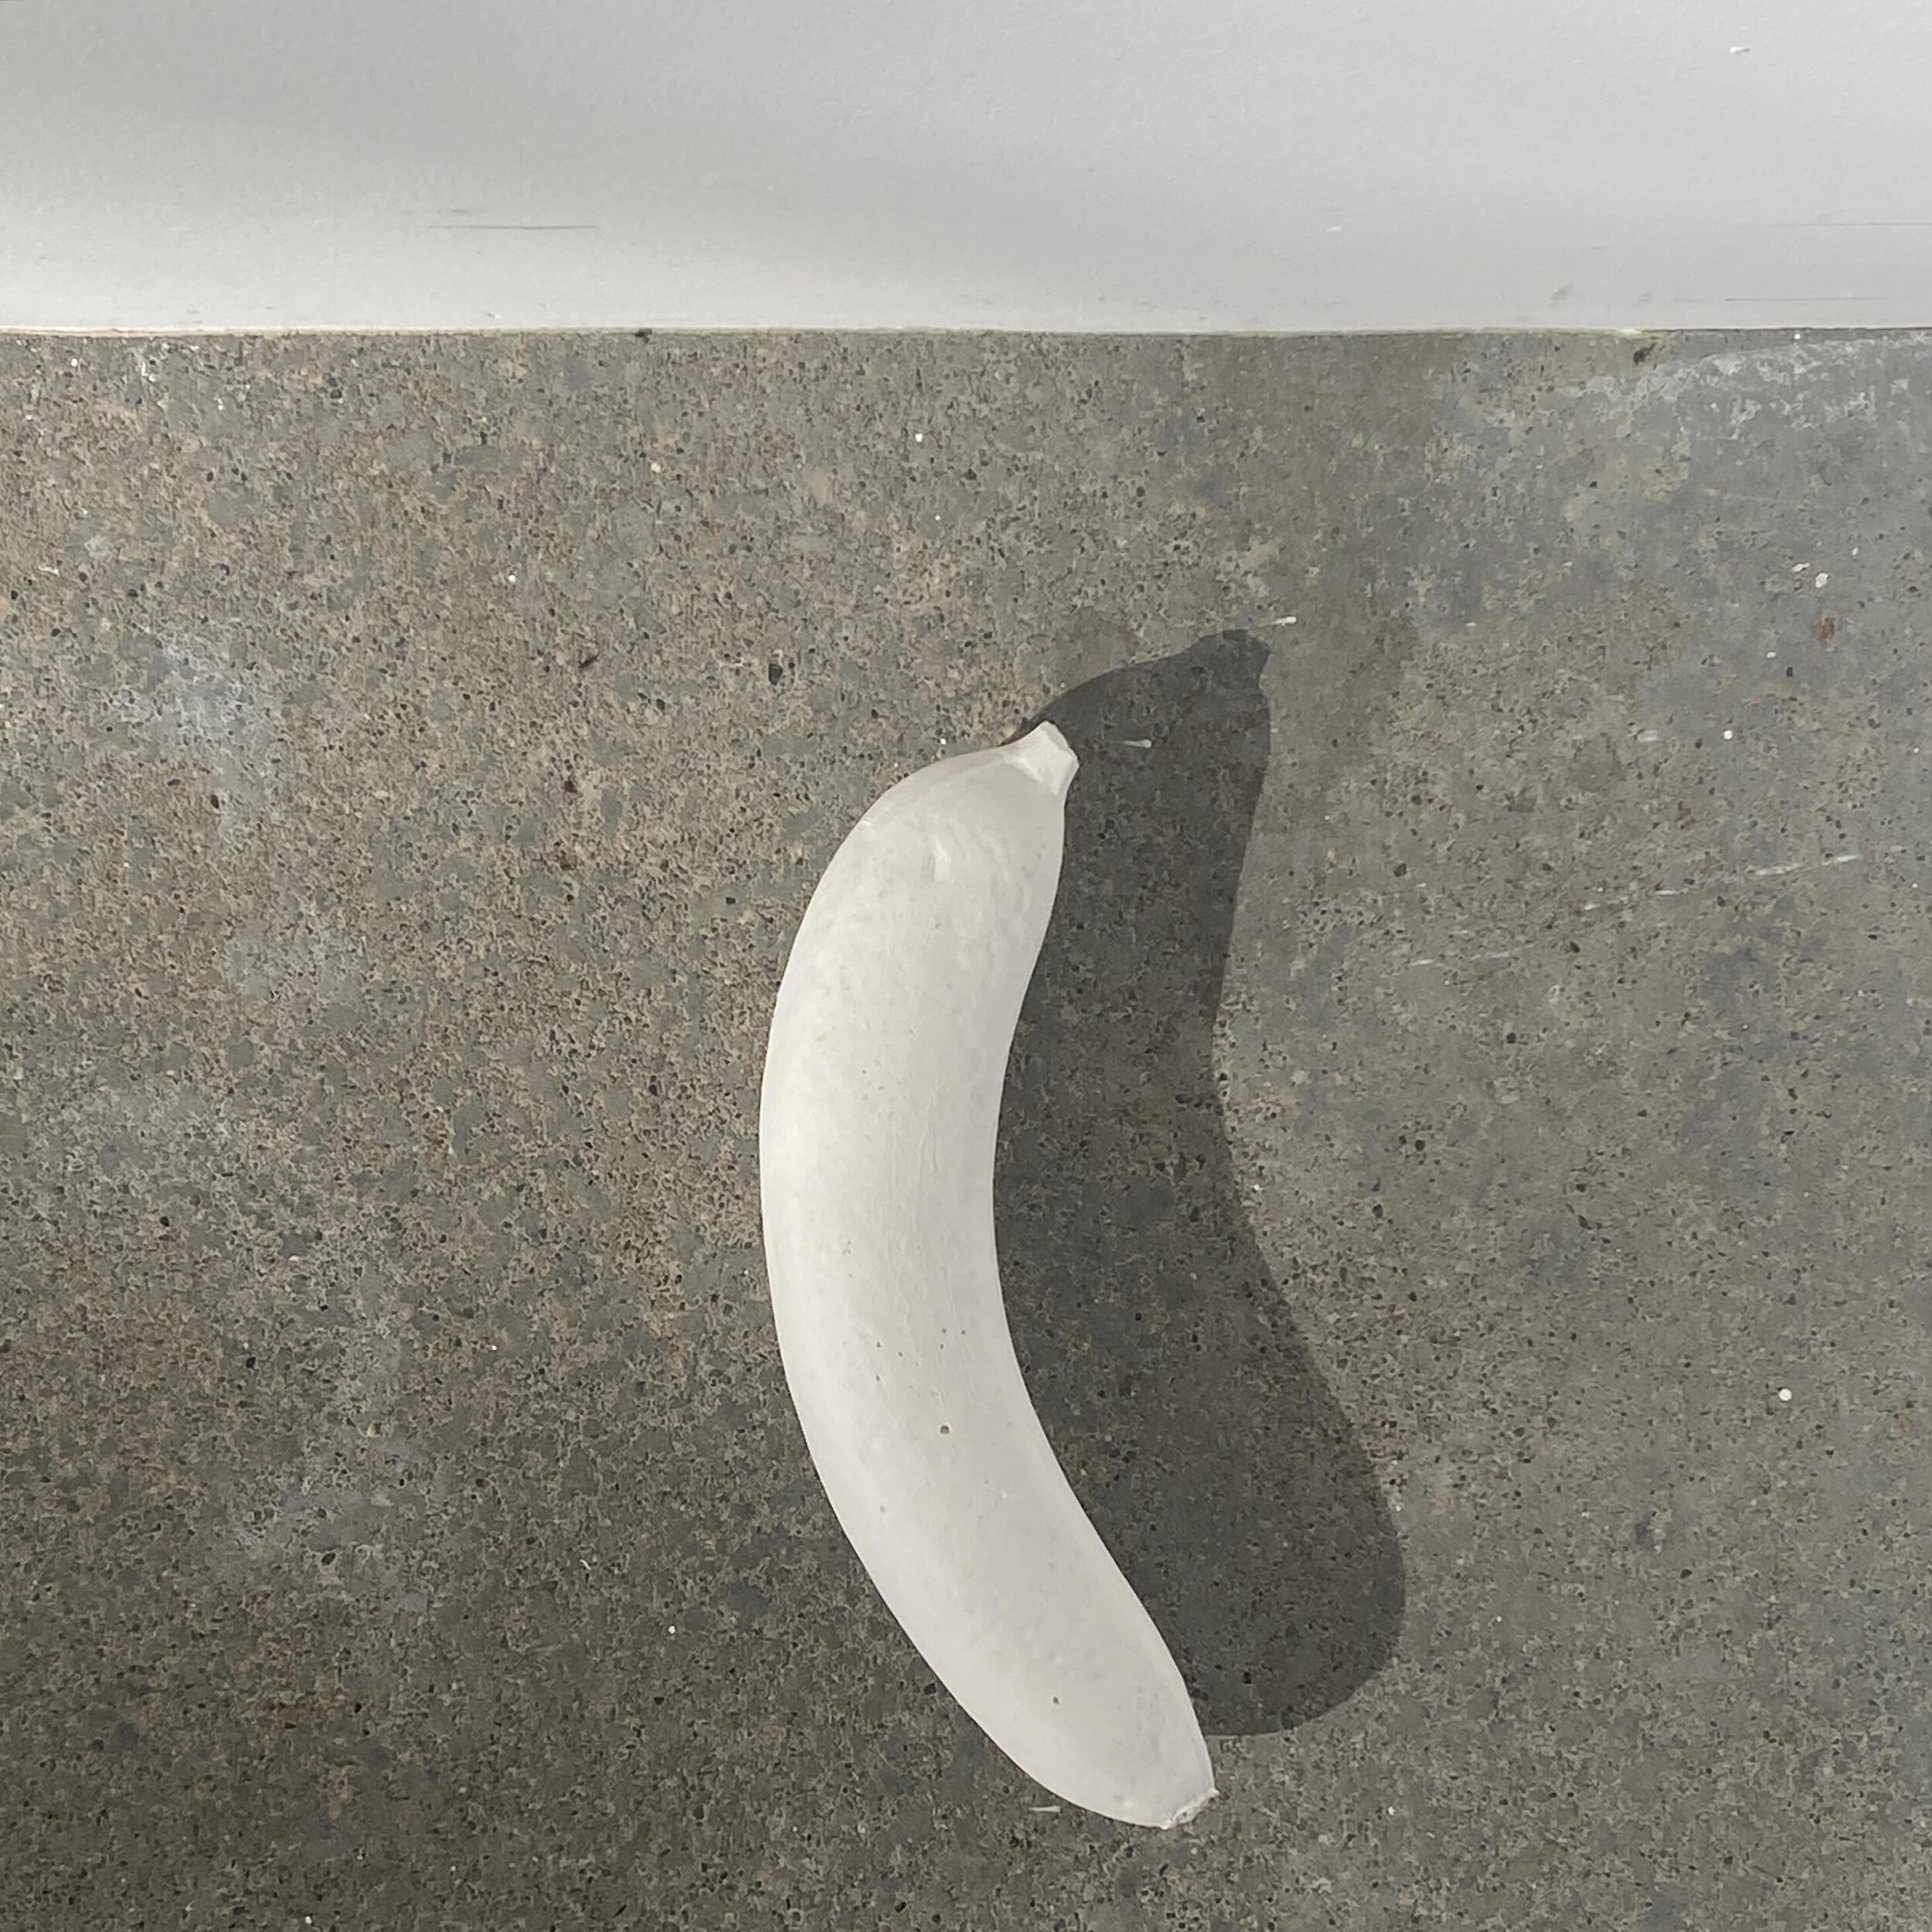 Shadow play on concrete #bananadramas #casting #banana #abstractphotography